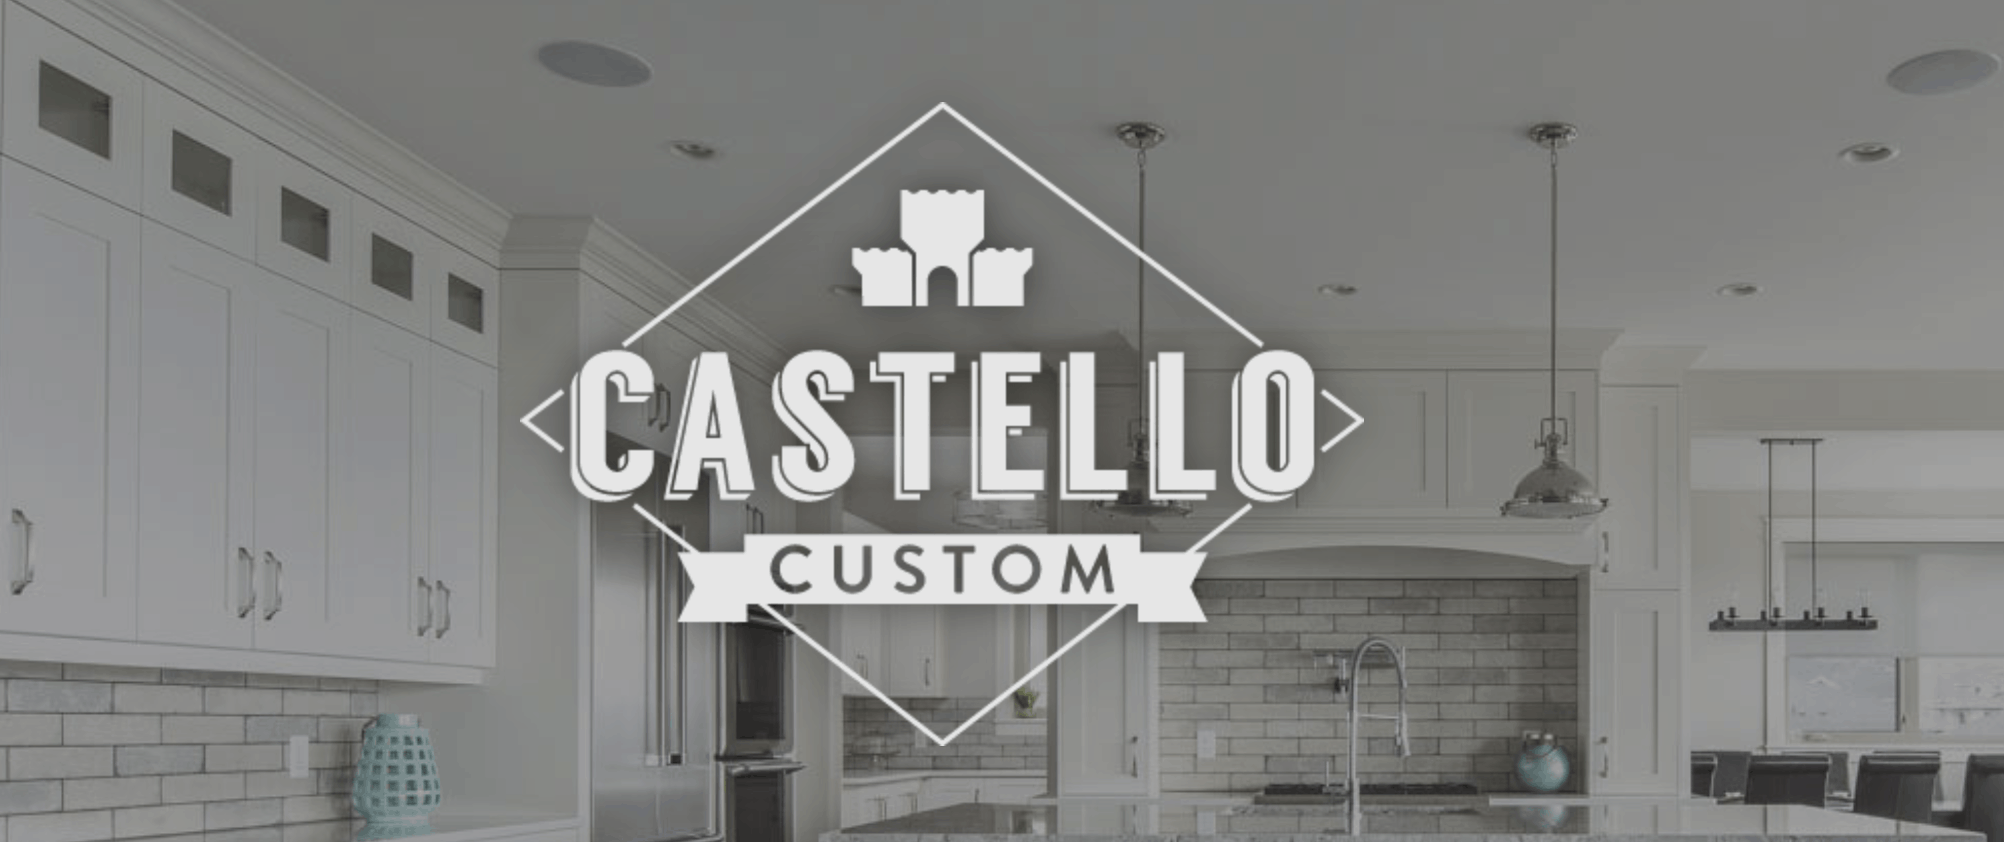 Woodworker logo: Castello Custom